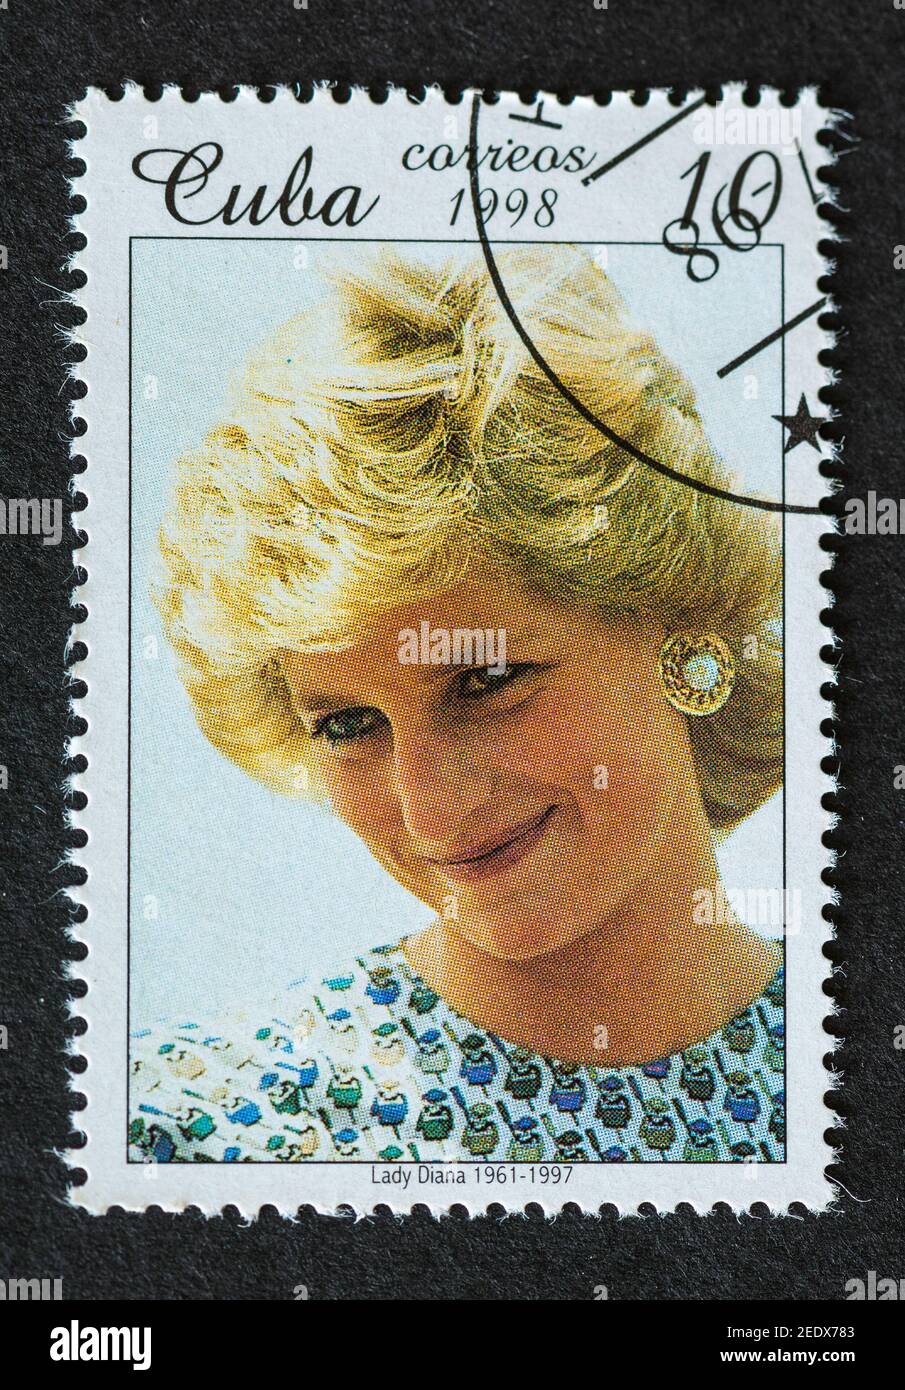 Princess Diana, Old Vintage Cuban Postage Stamp Stock Photo - Alamy